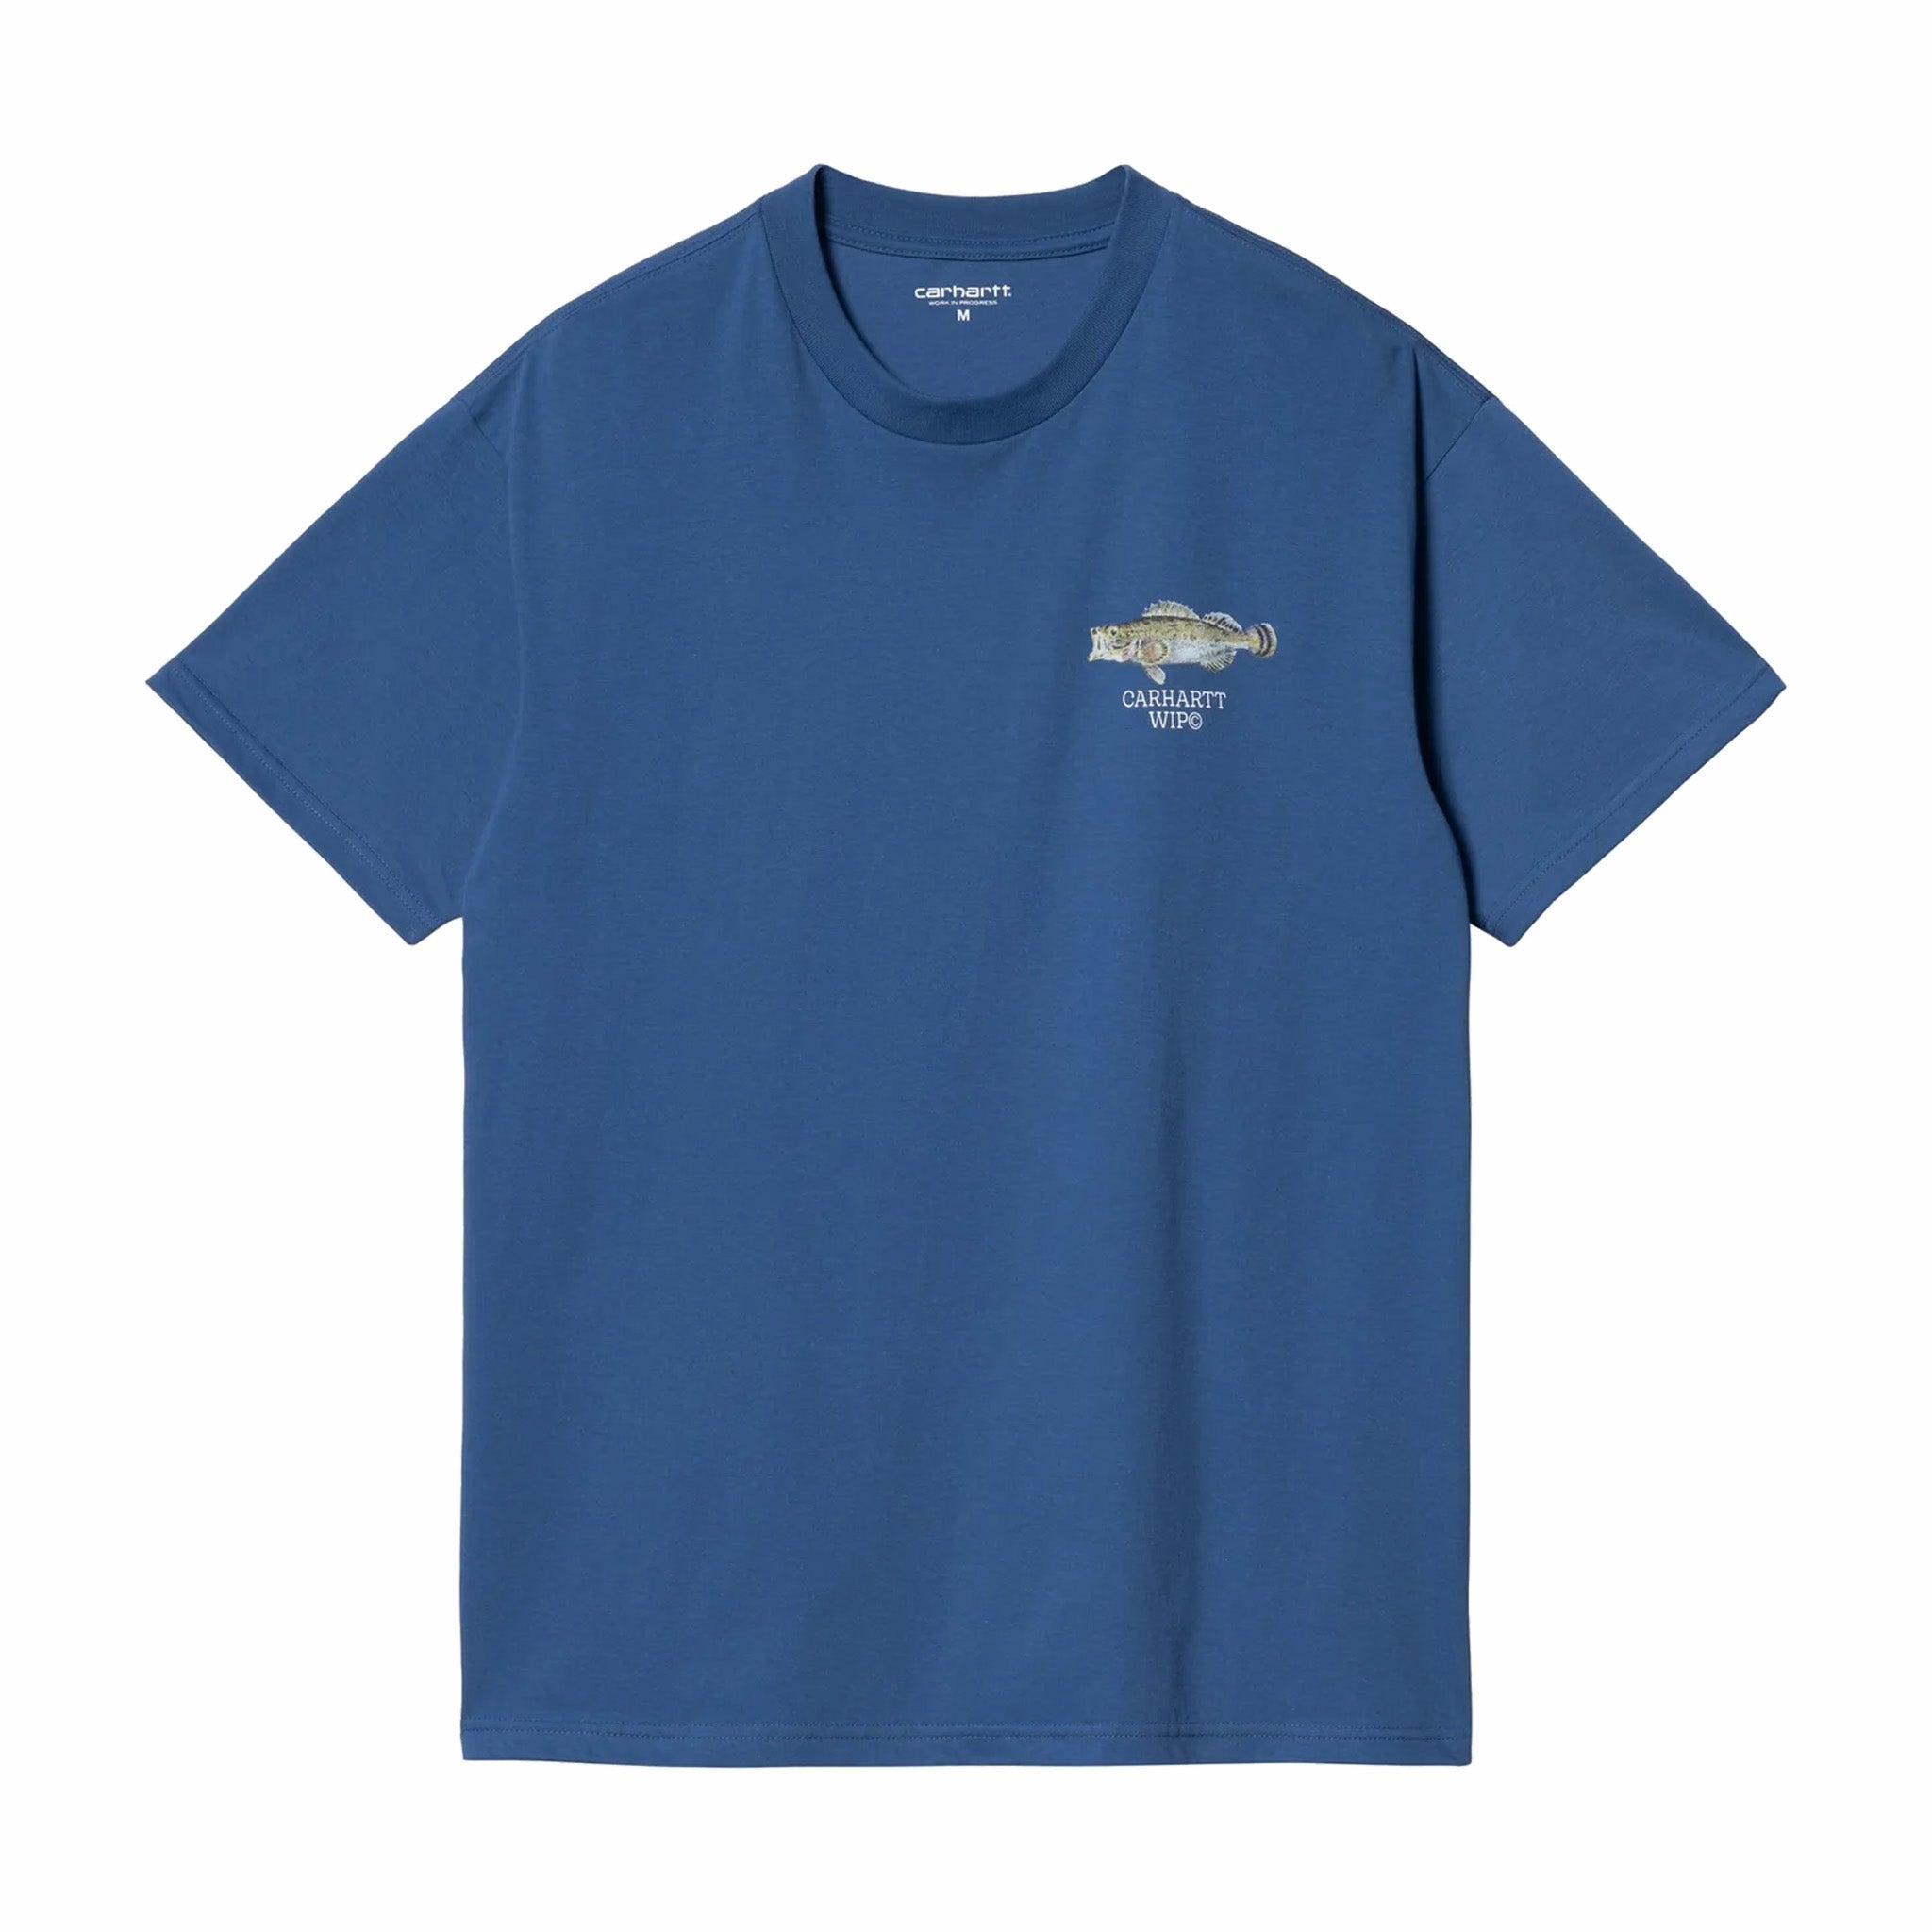 Carhartt WIP S/S Fish T-Shirt (Acapulco) - August Shop